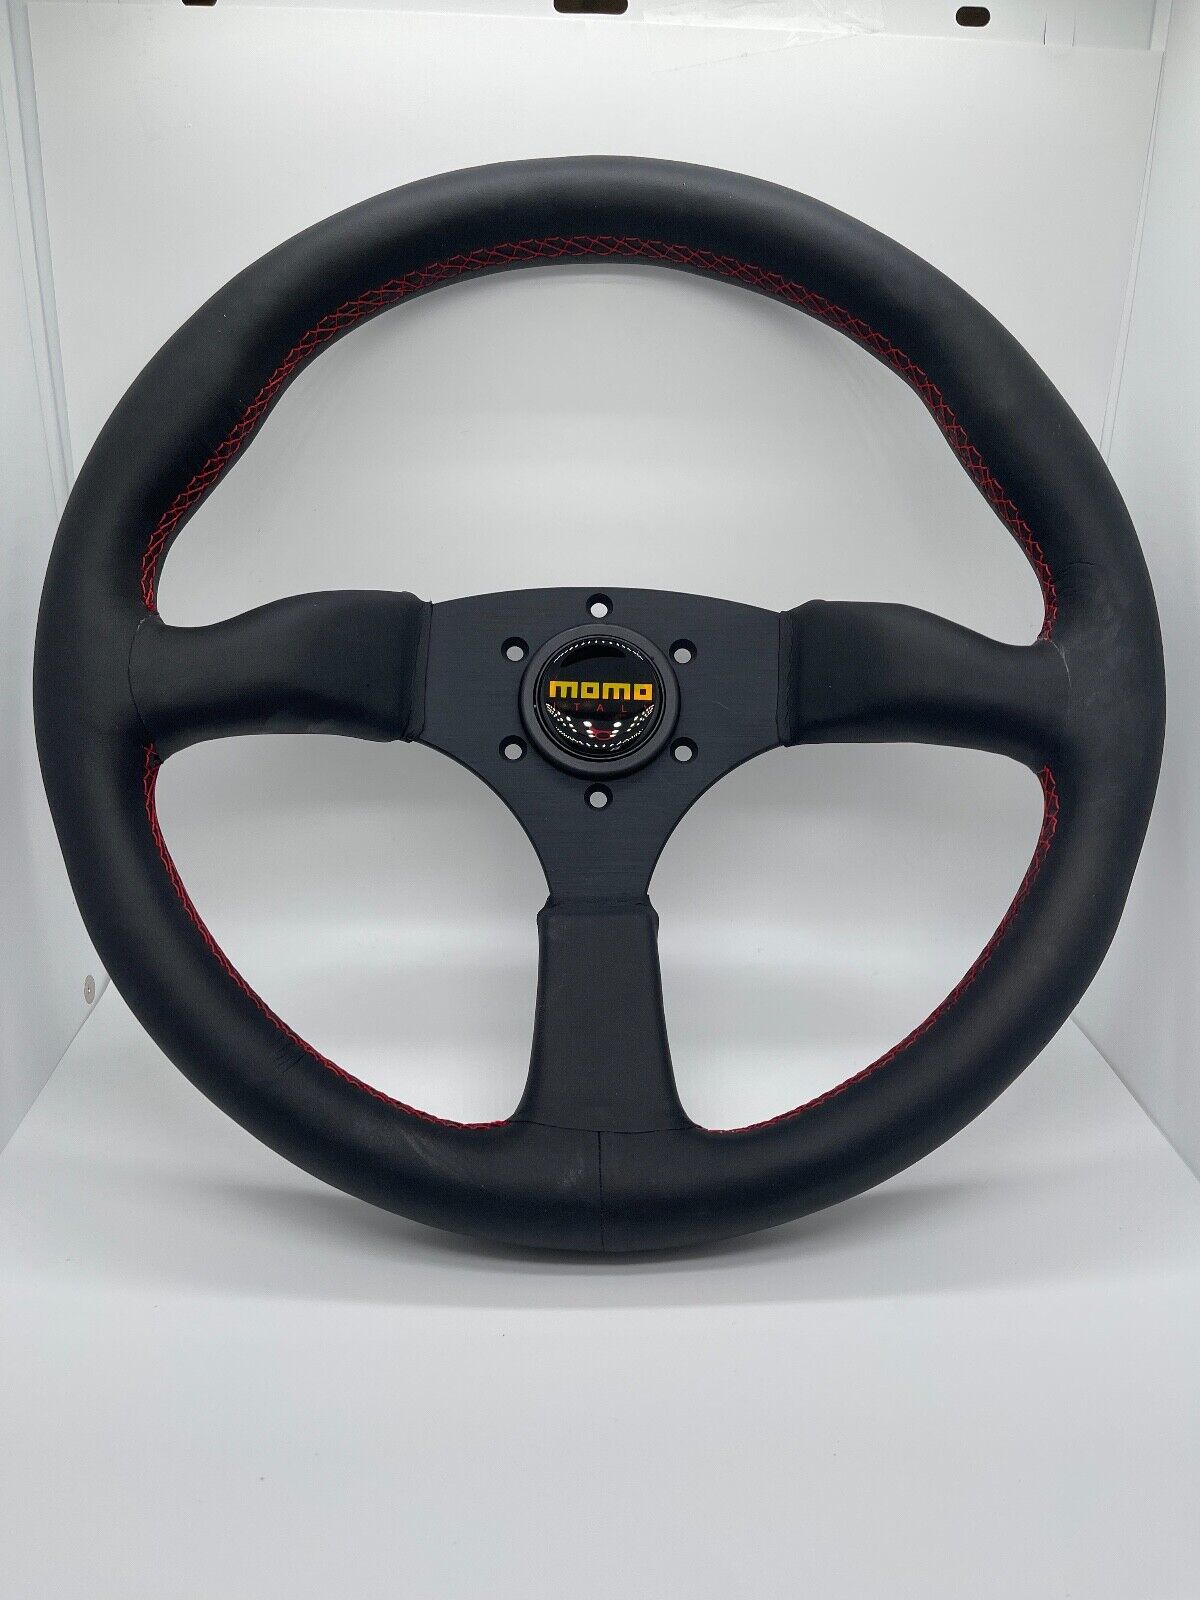 Momo Sports Style 350mm steering wheel fits Toyota Honda Acura Miata Rx7 FD  FC